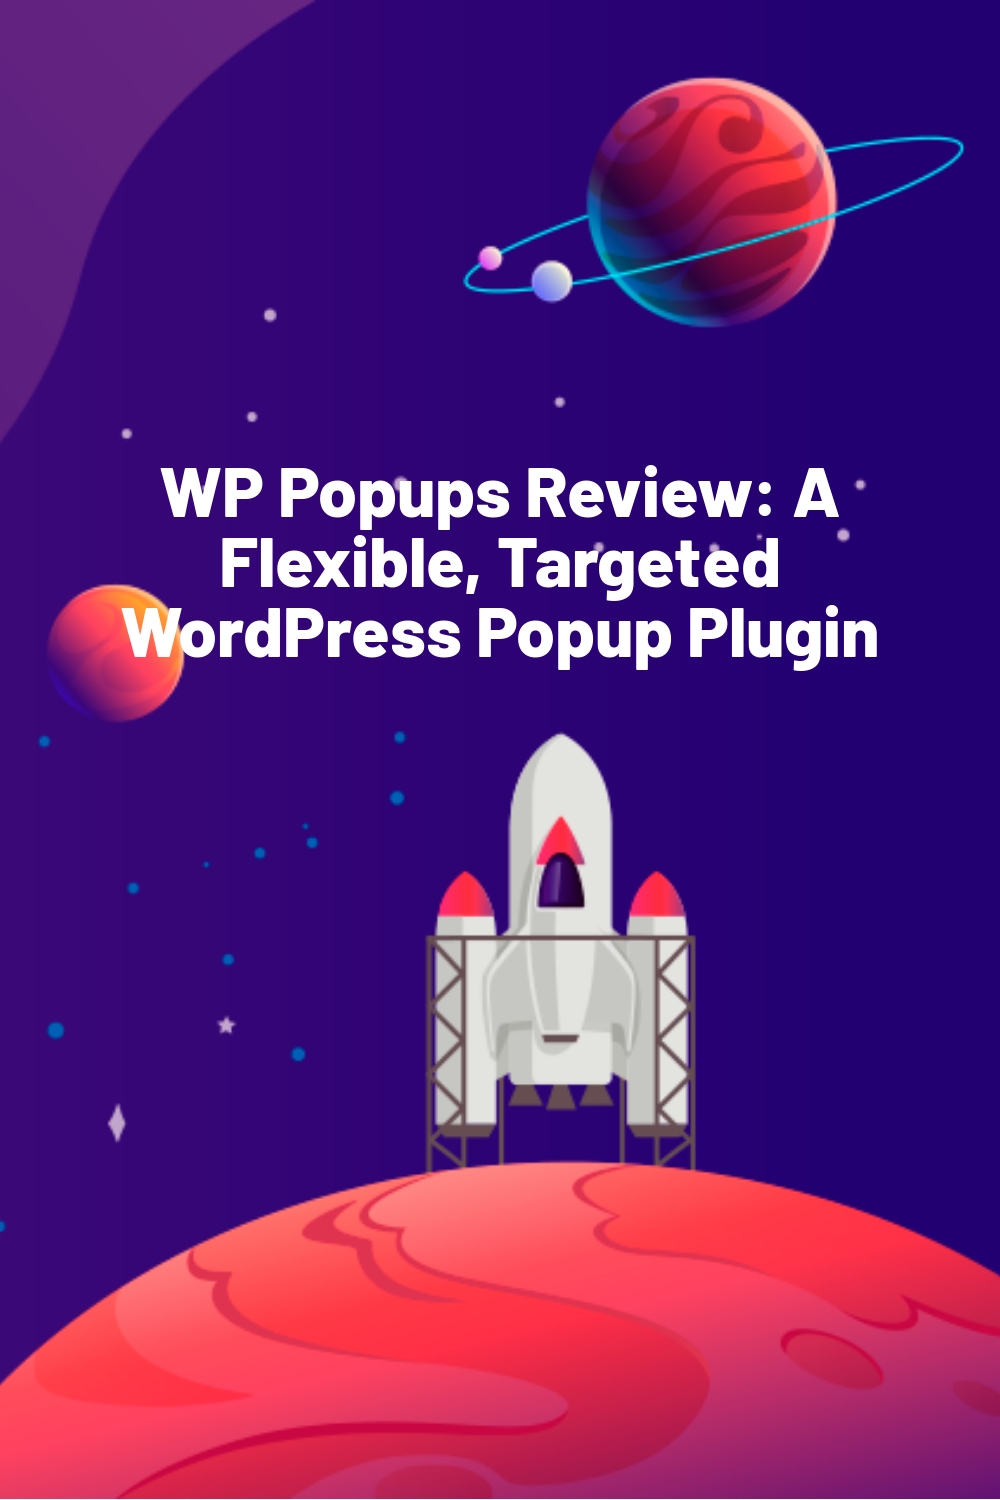 WP Popups Review: A Flexible, Targeted WordPress Popup Plugin